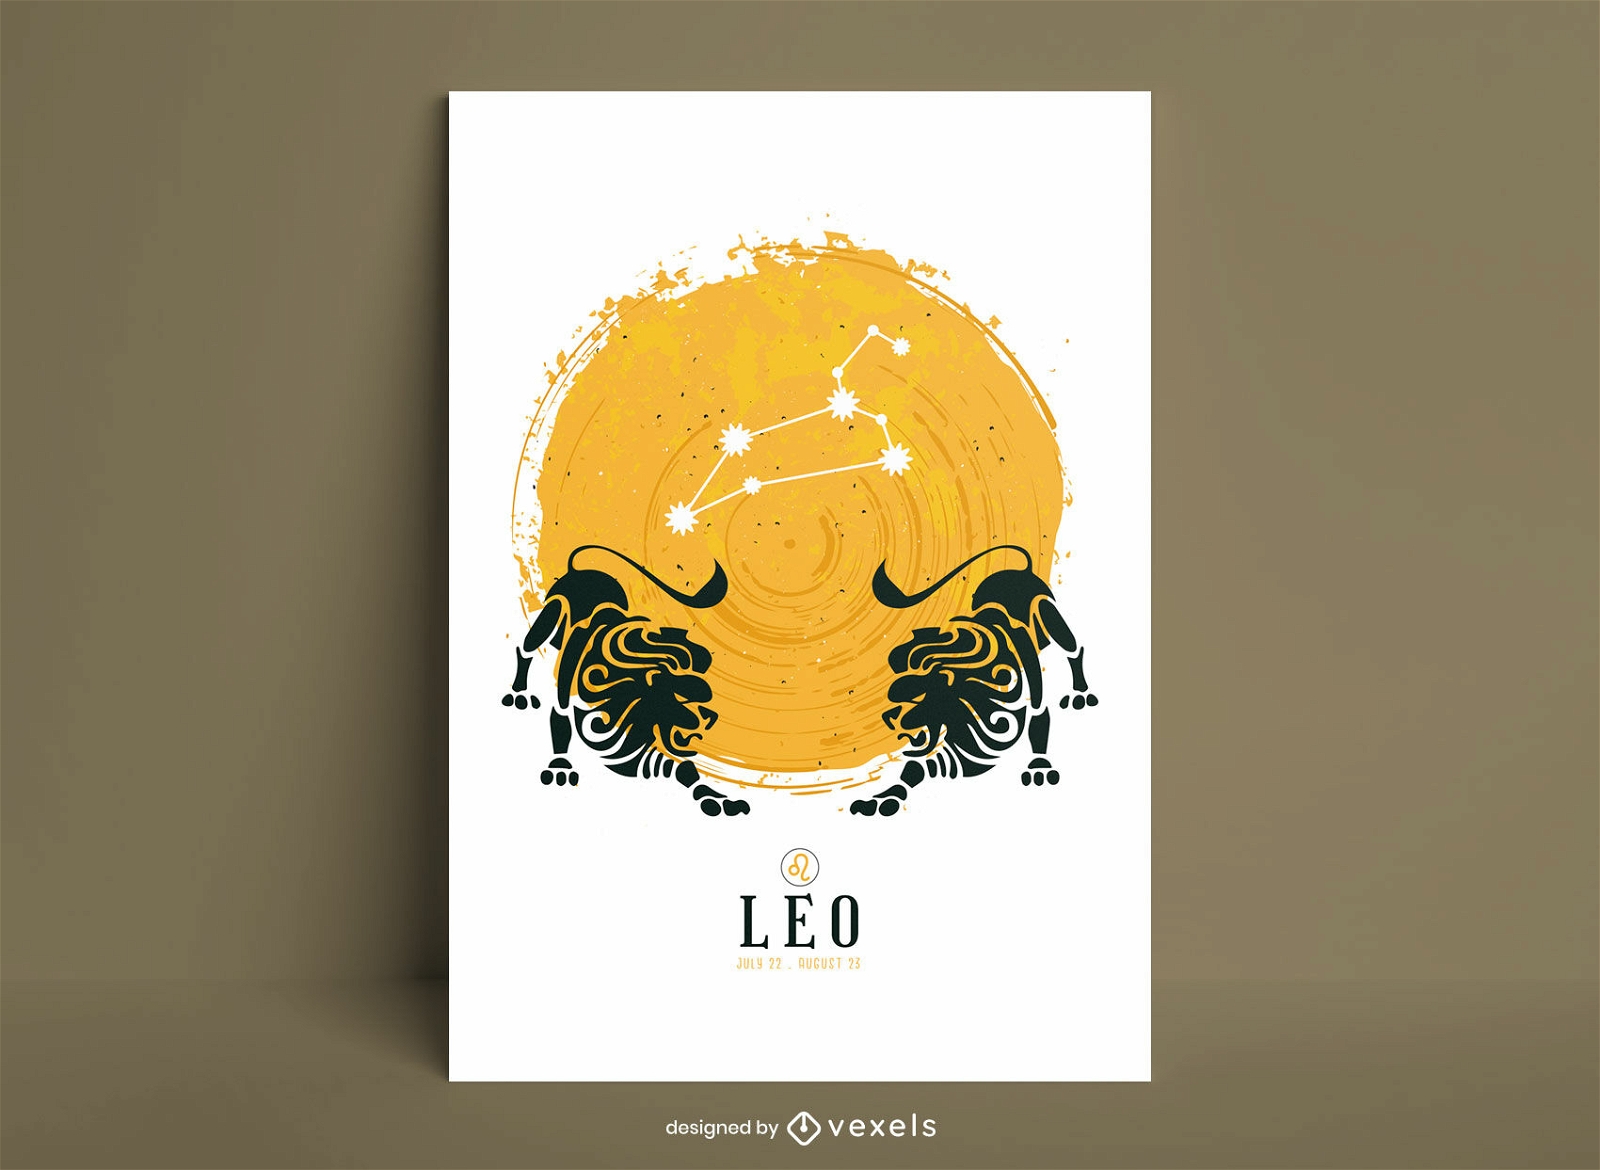 Leo constellation zodiac poster template